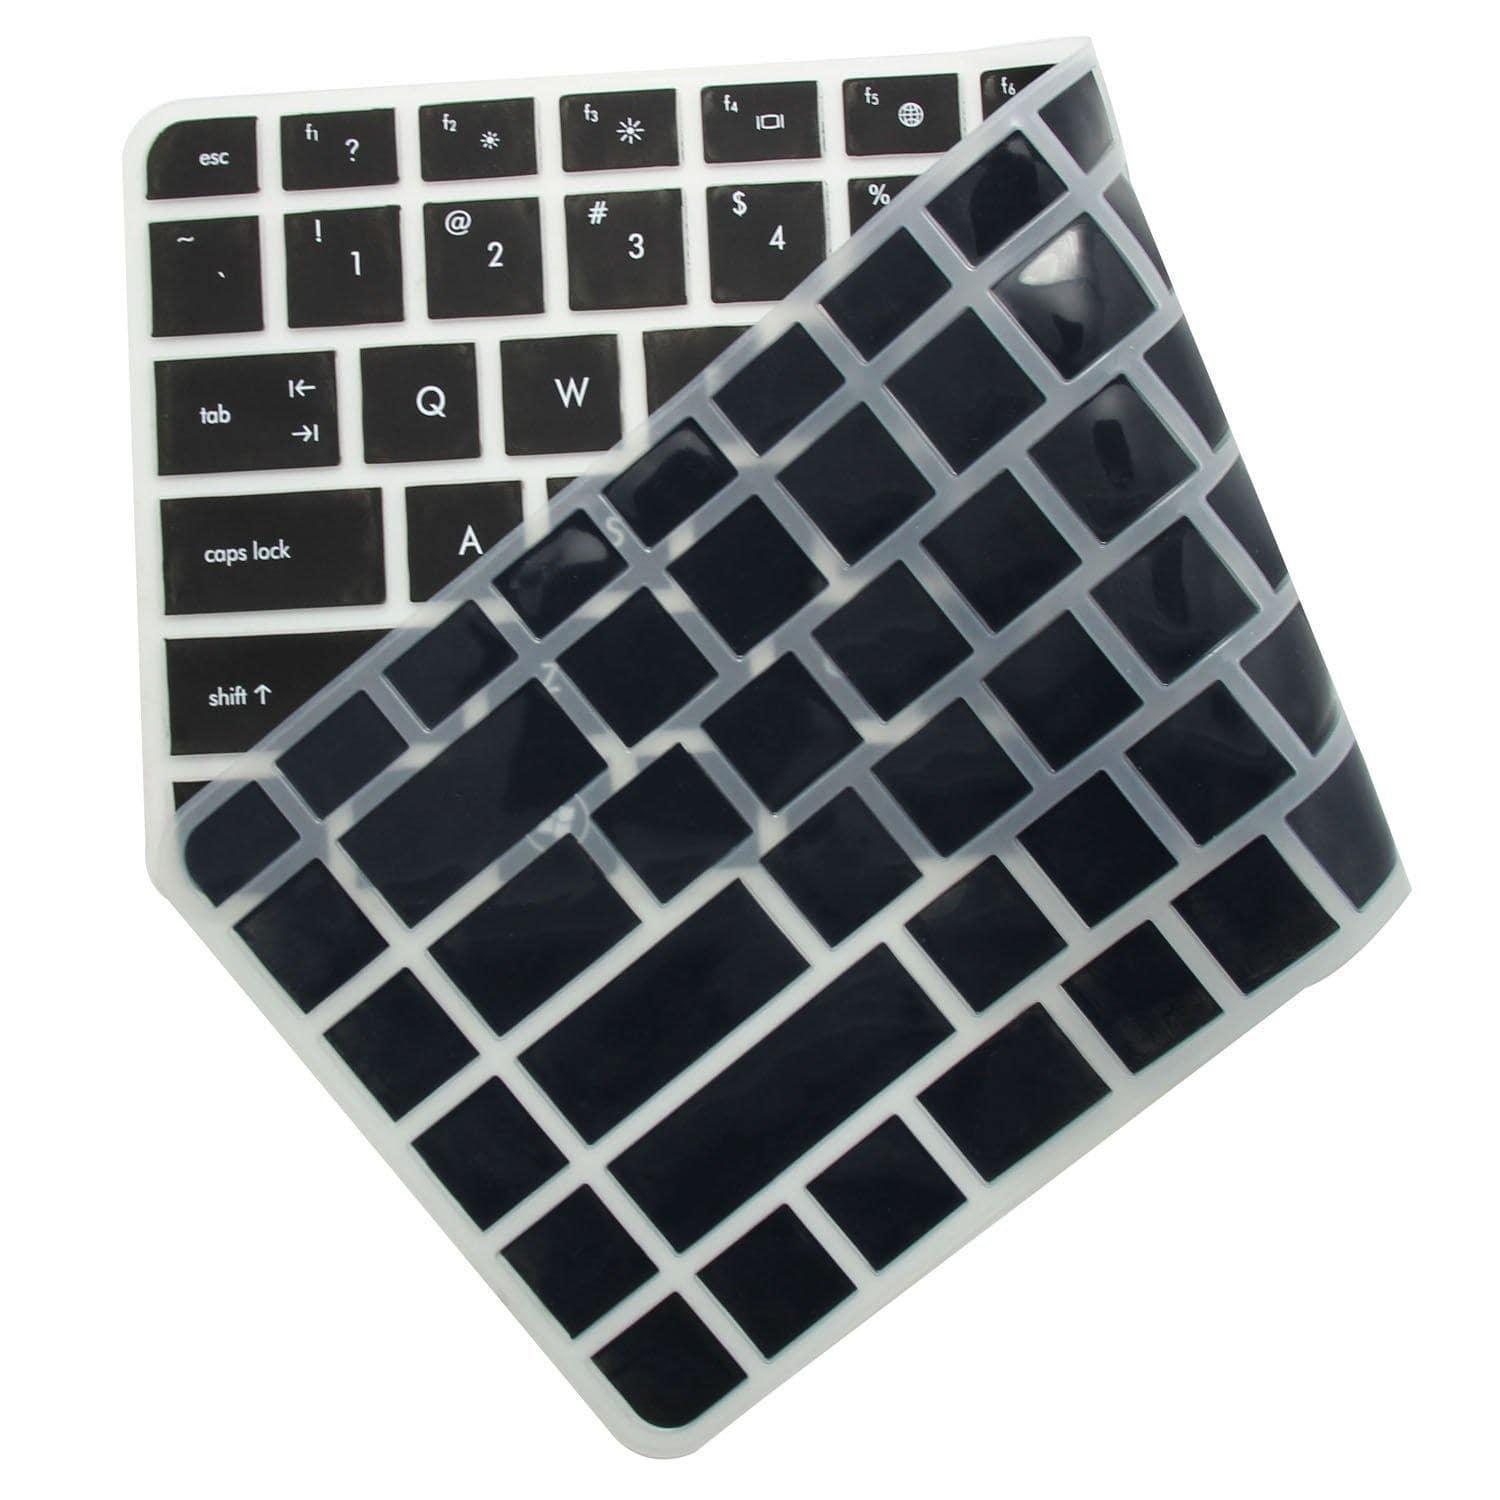 Dealsplant Keyboard Skin Cover Protector for Hp Pavilion G4, G6 1xxx , envy 14-1007tx, hp 2000, dv4-3000 Series, presario Cq43, 430, 431 CQ57, CQ58-Keyboard Protectors-dealsplant